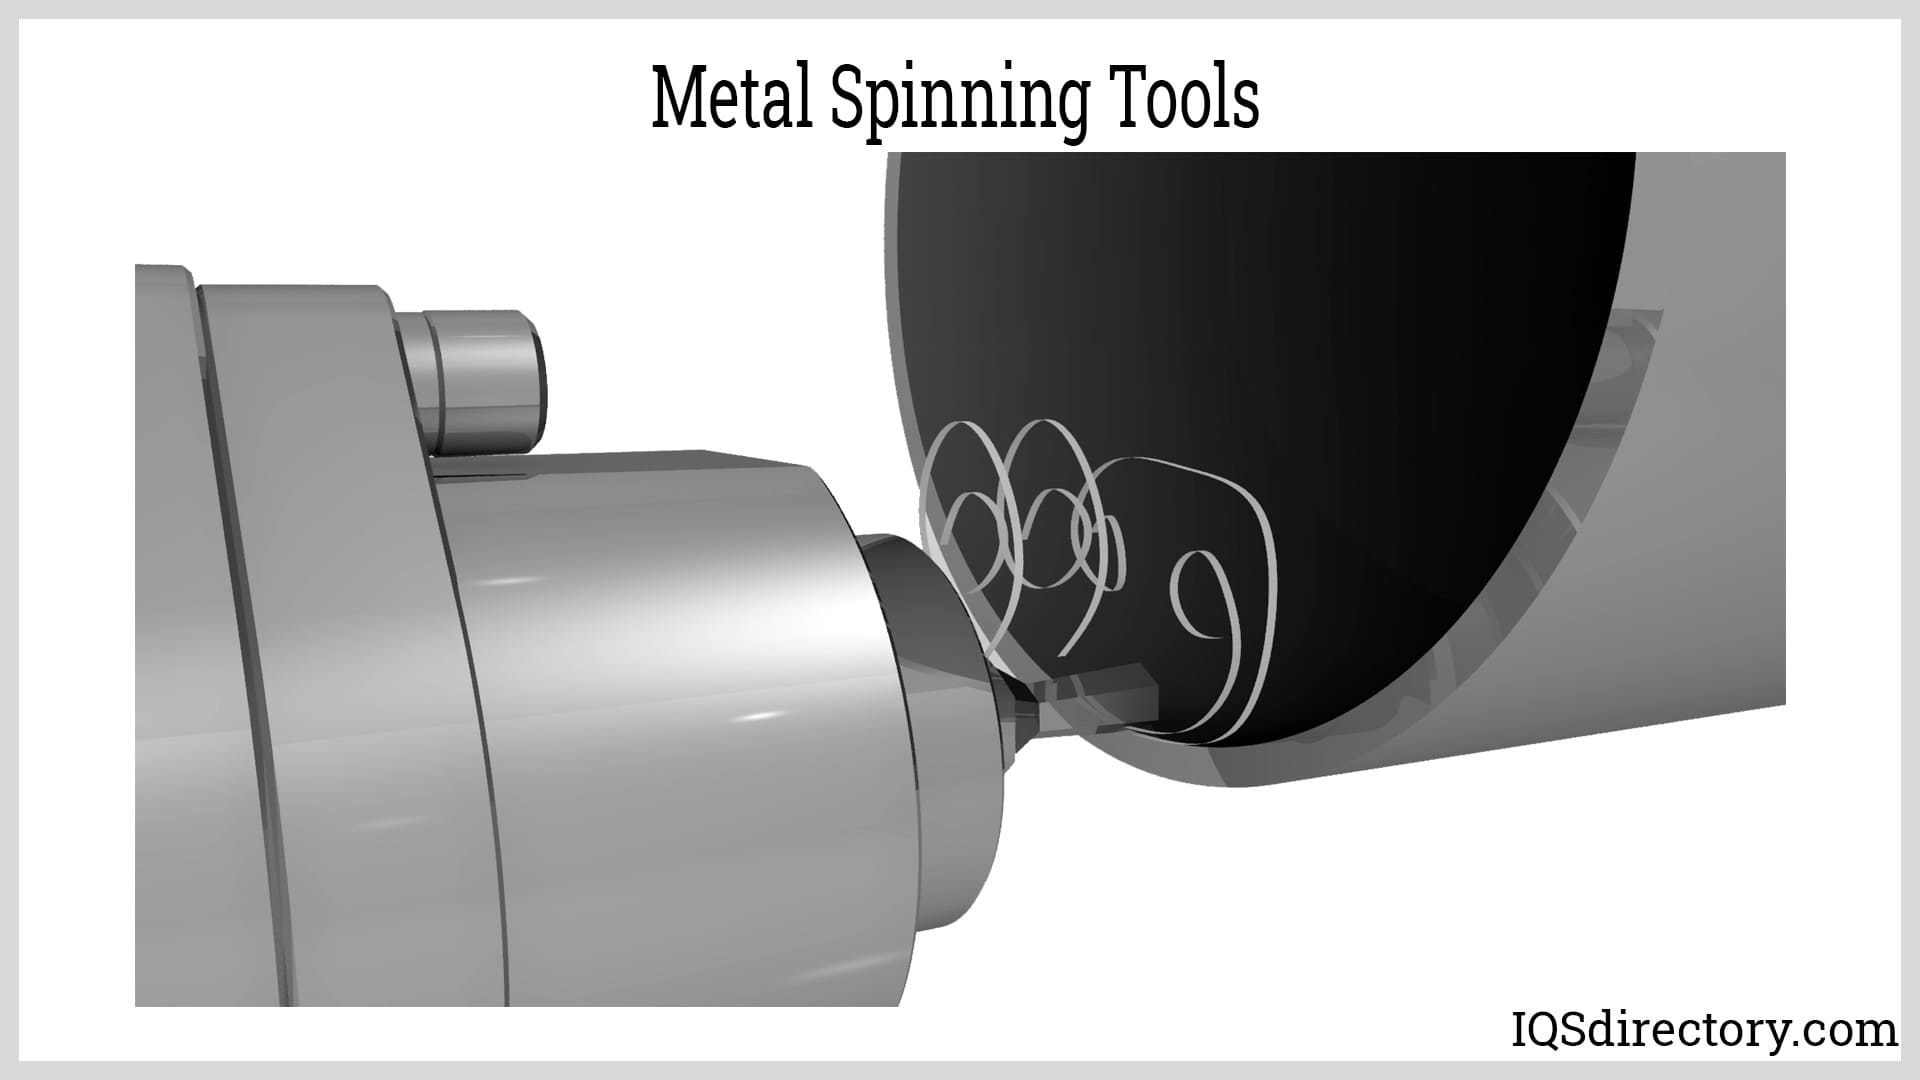 Metal Spinning tools